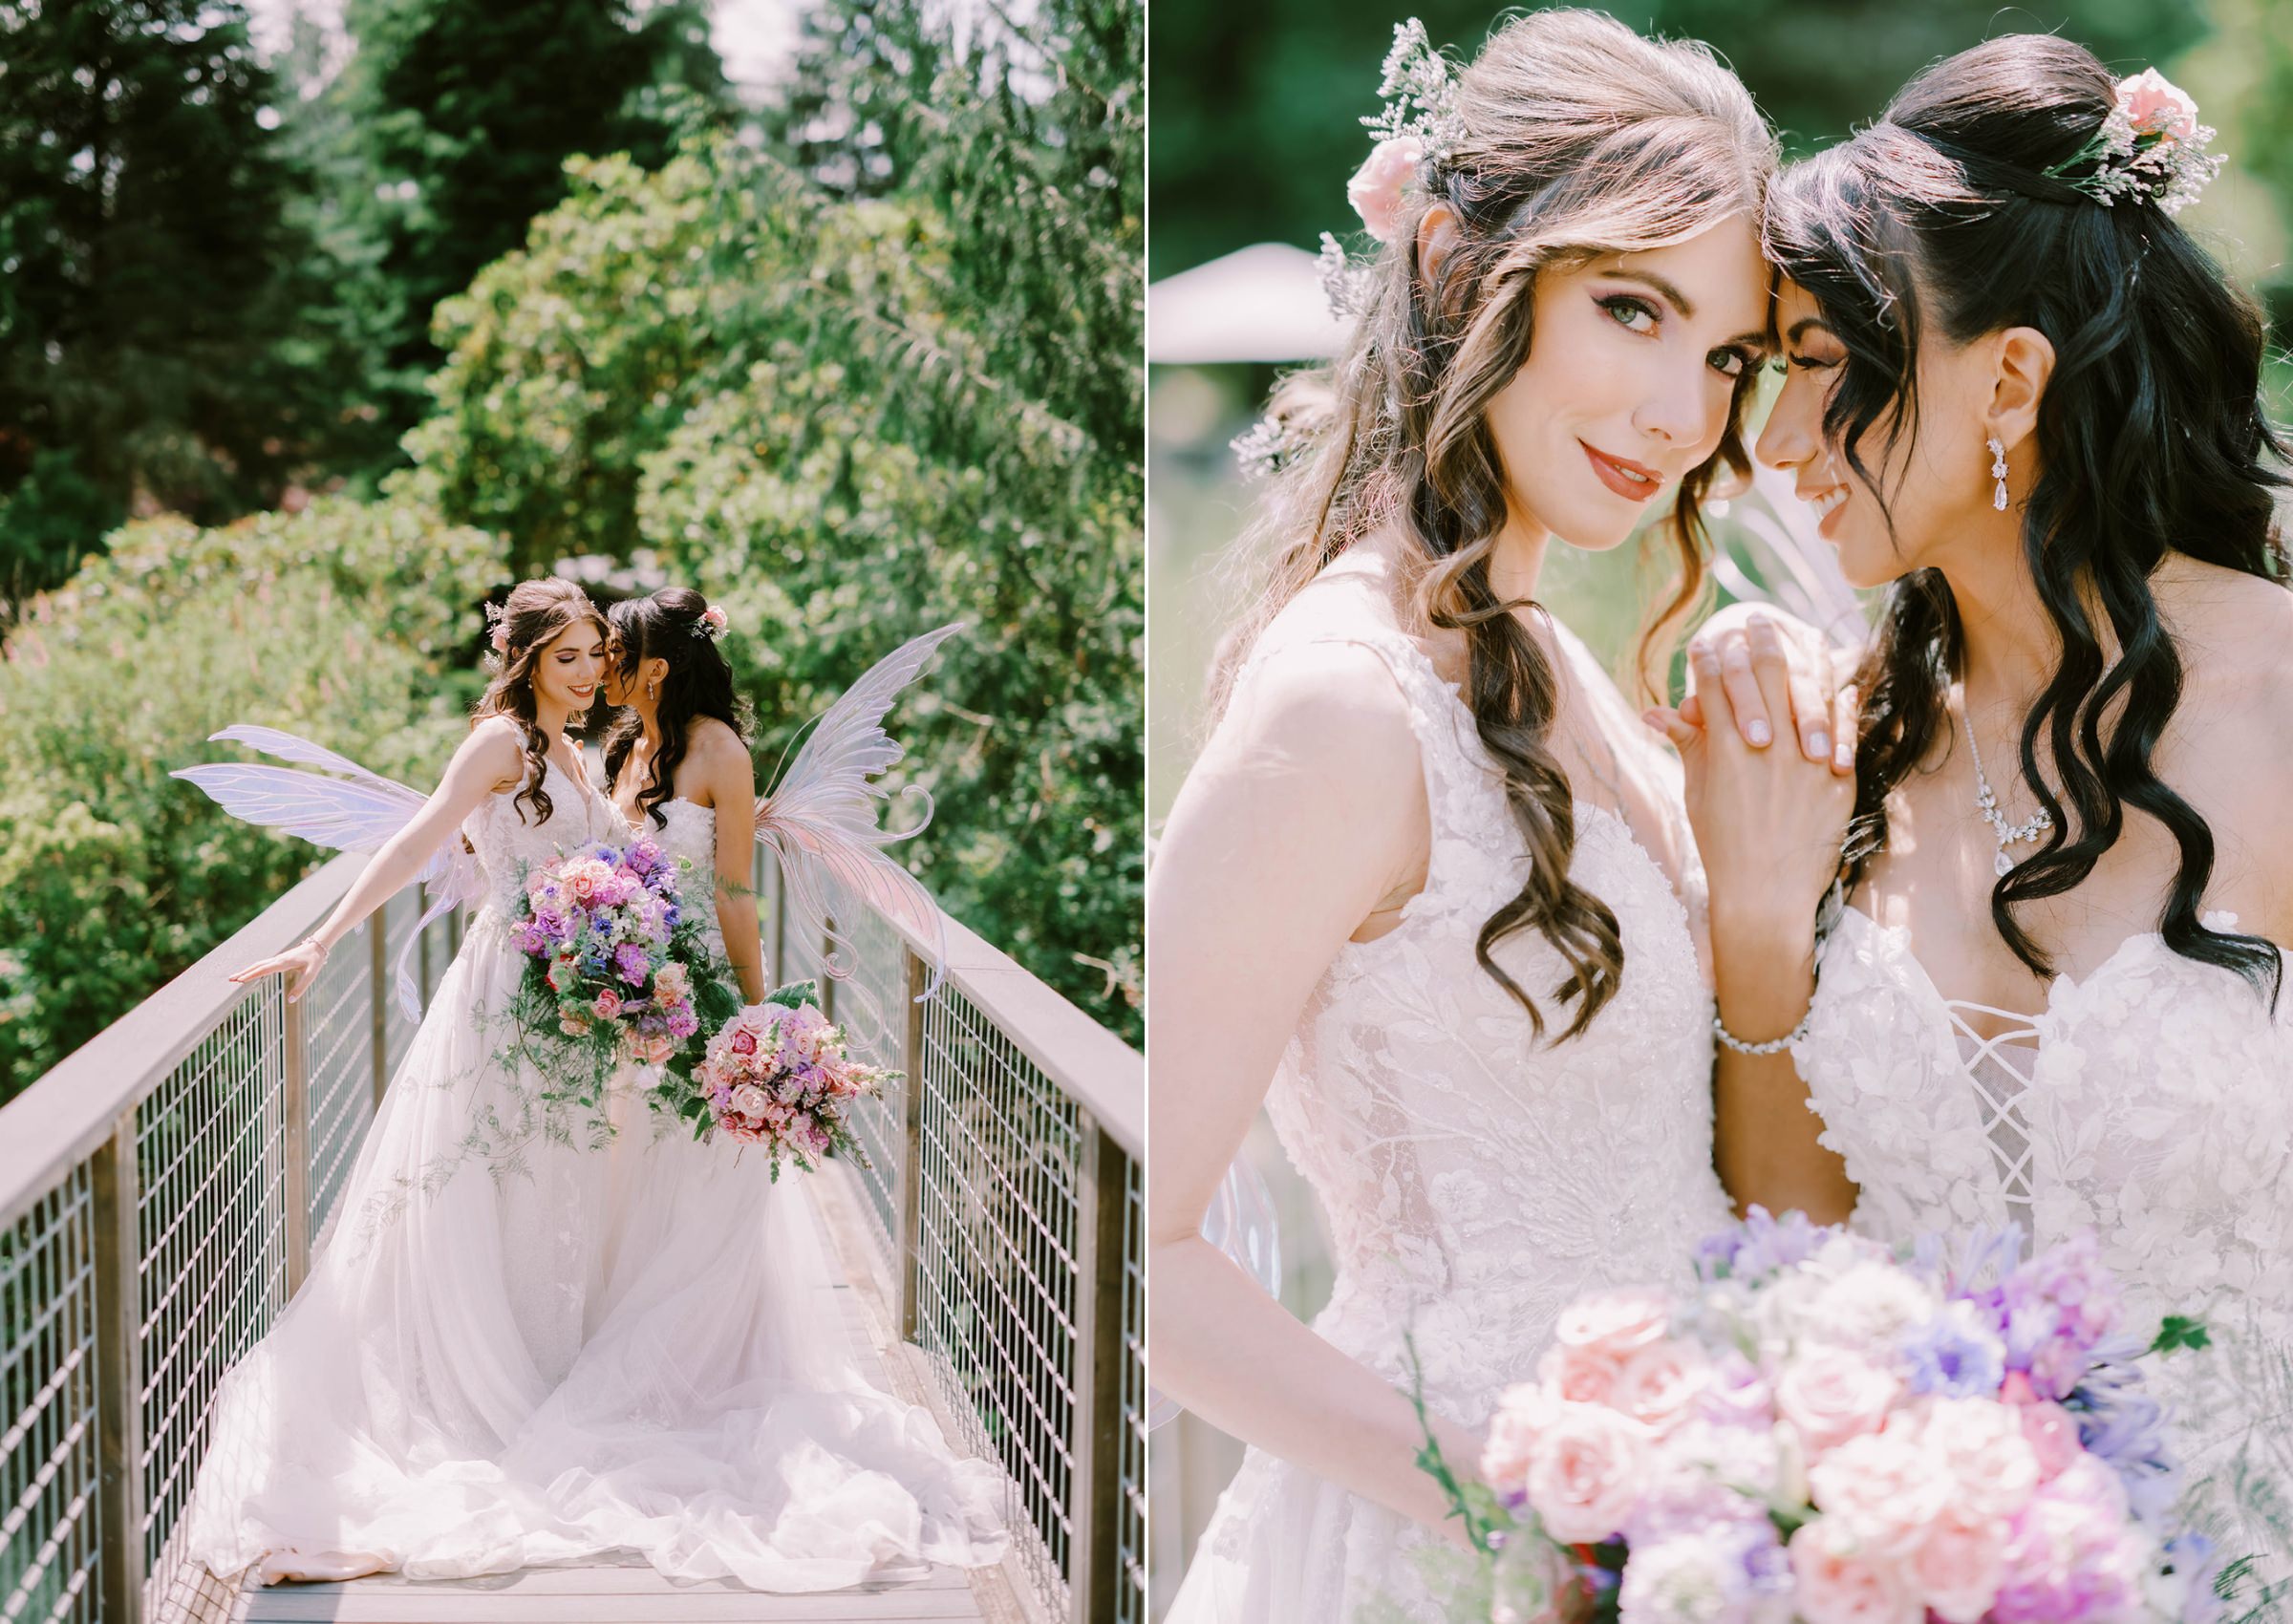 Megan and Erika's wedding photos at Graybridge Venue in Snohomish, WA. Summer 2022